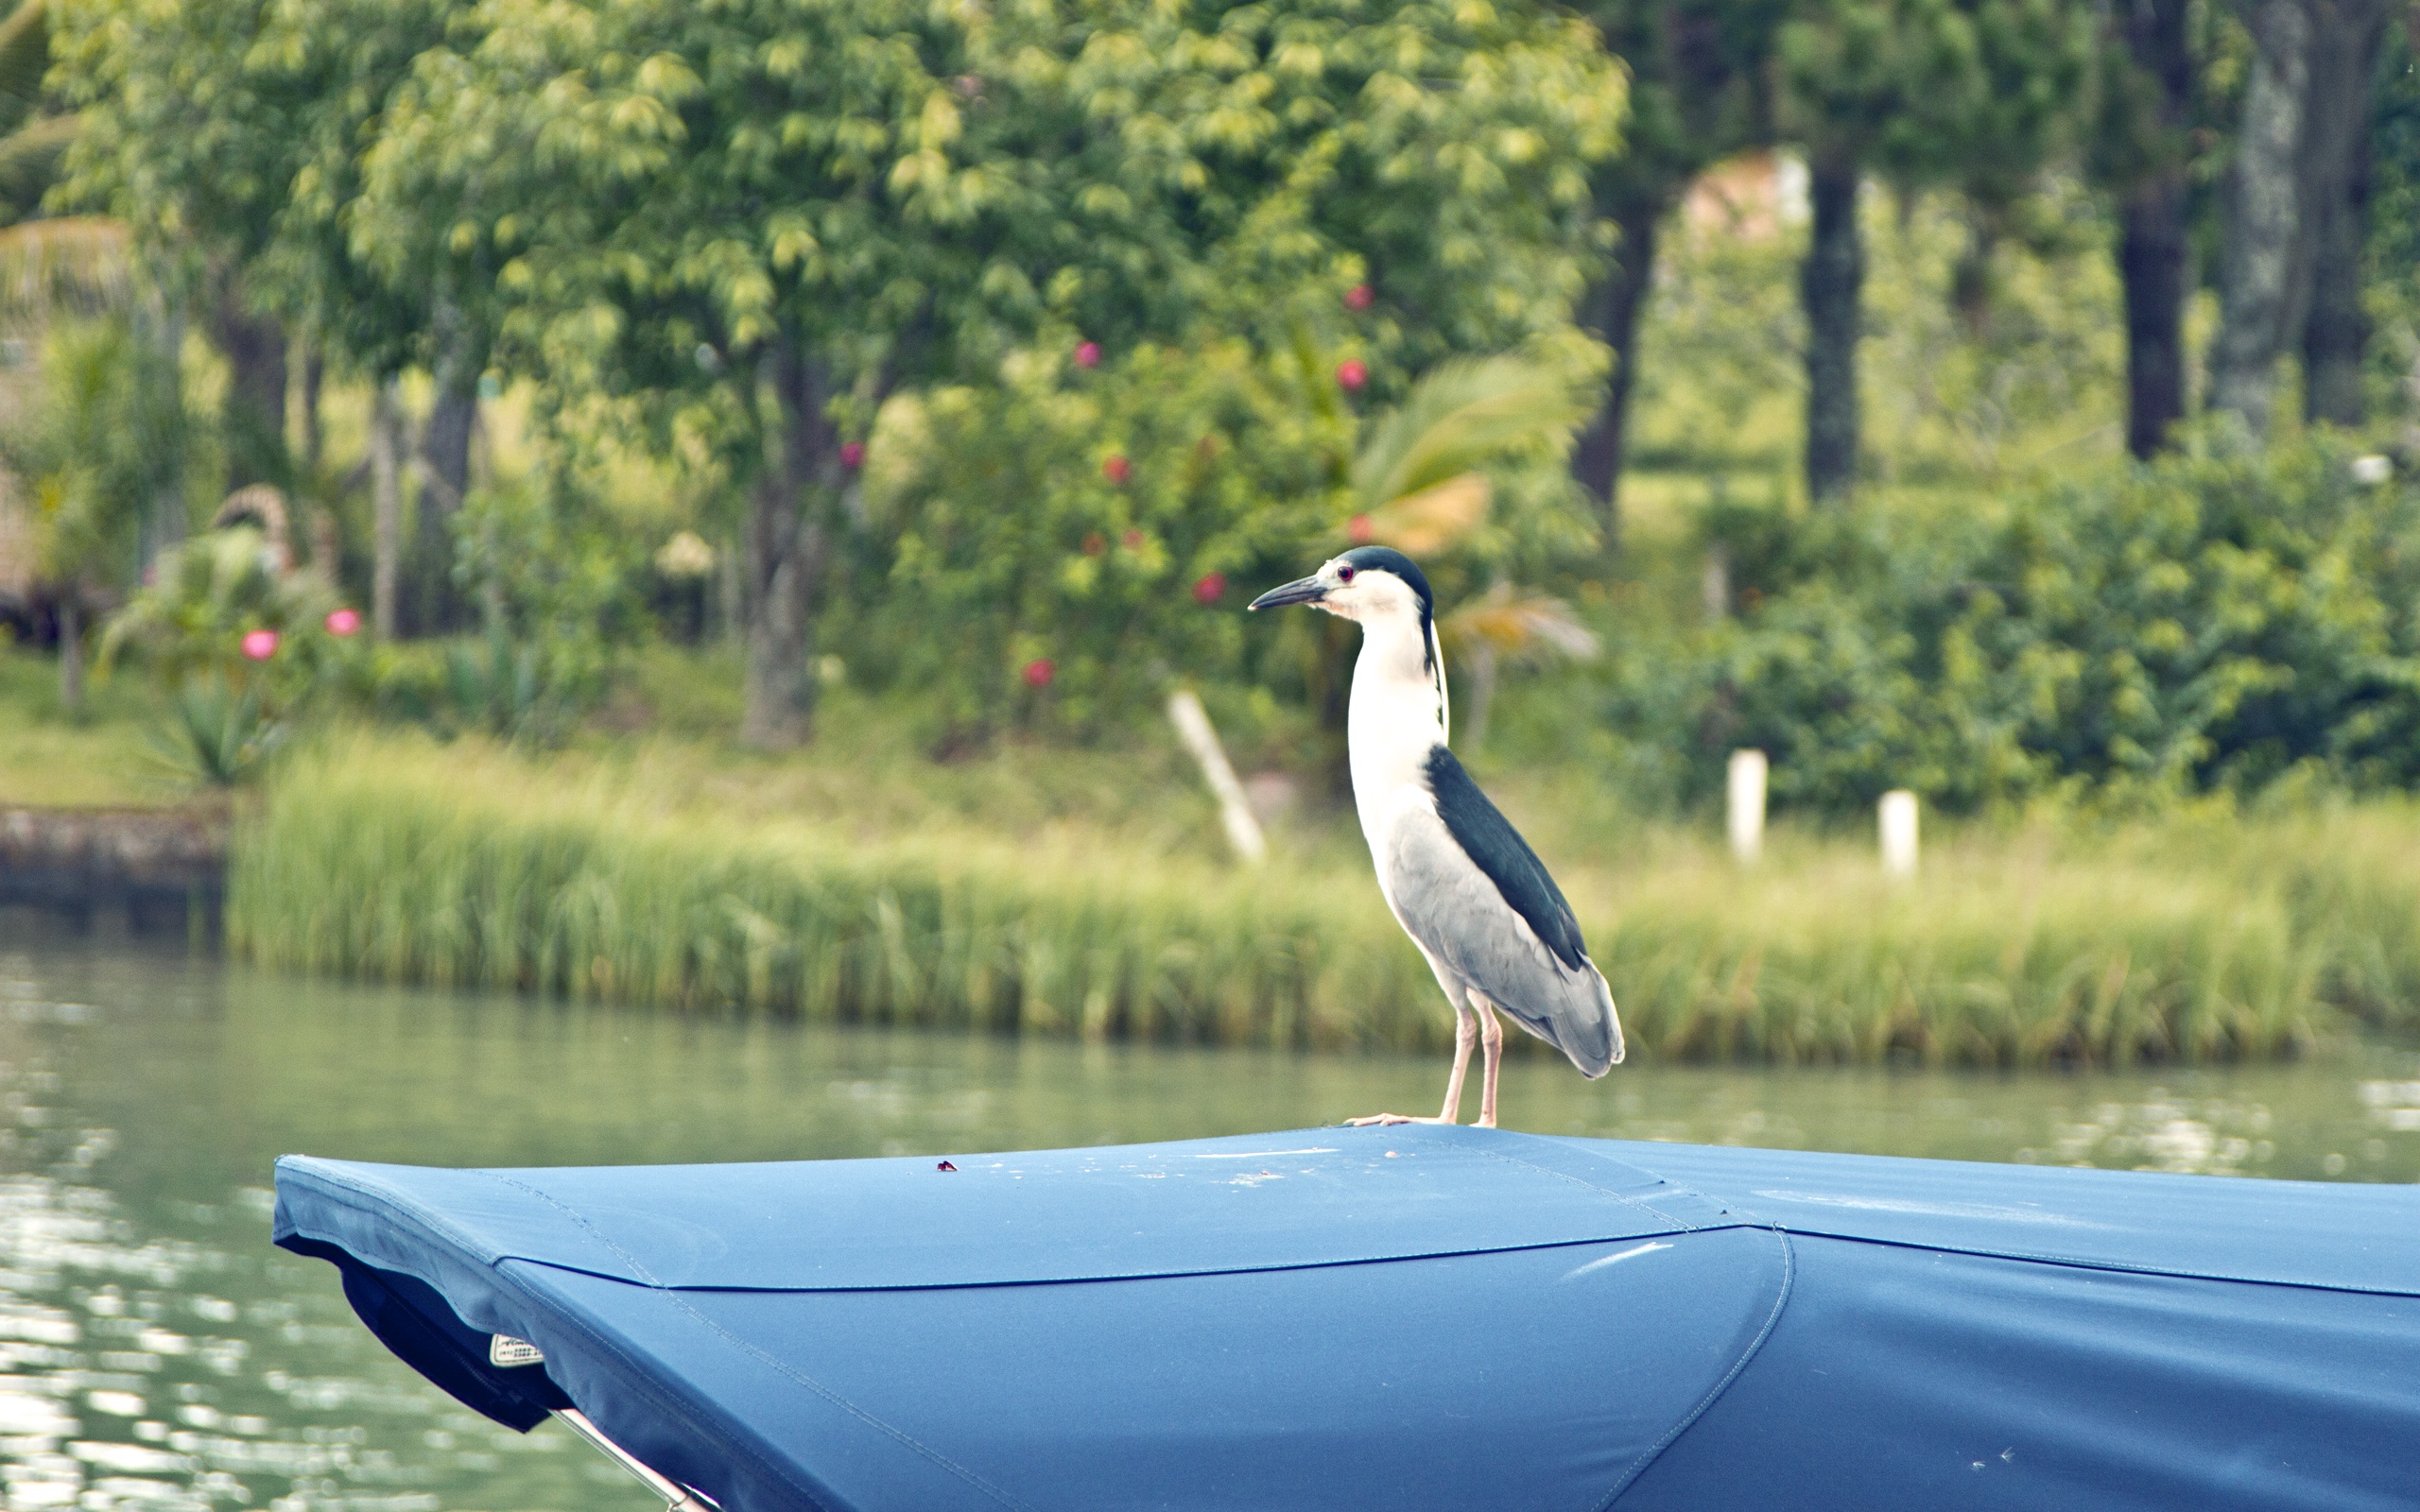 Bird on the Boat by Carlos Eduardo